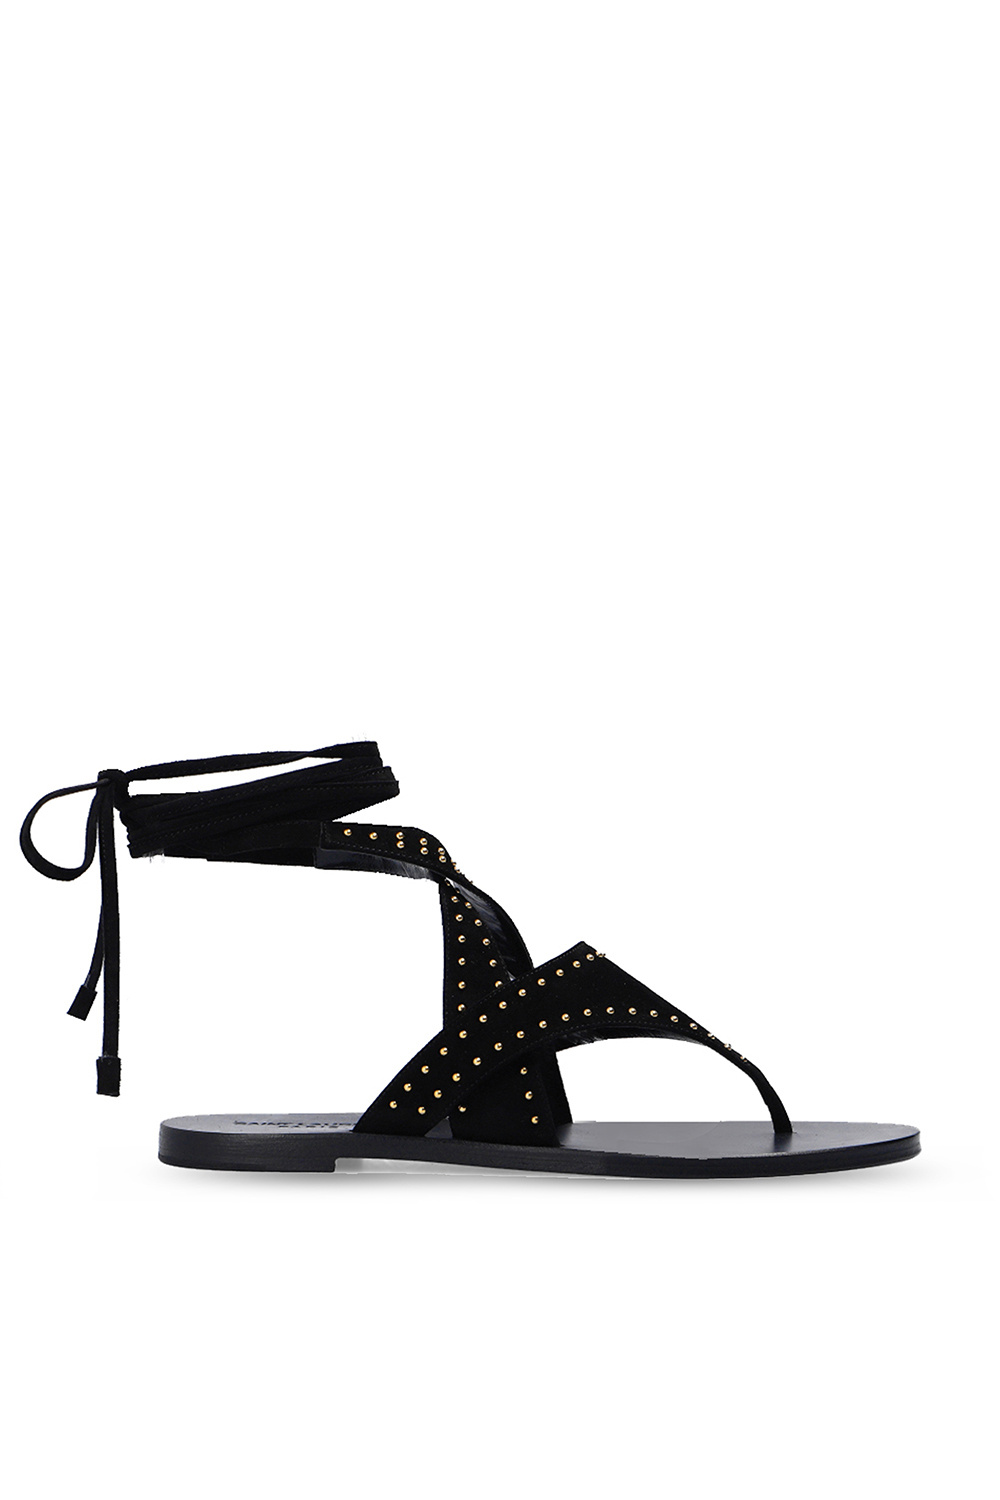 Saint Laurent ‘Gia’ sandals